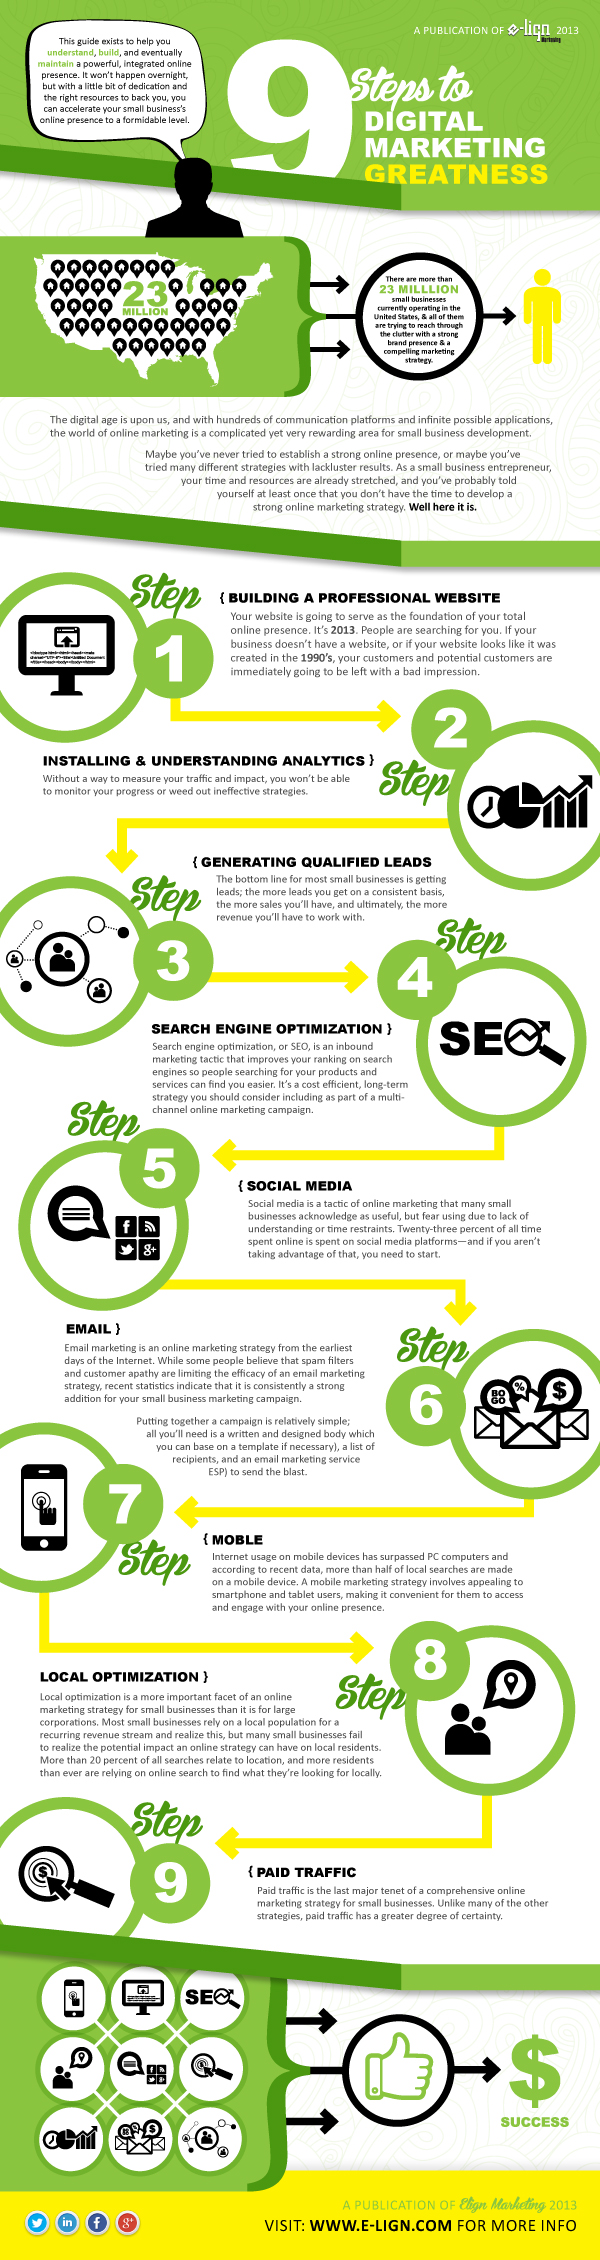 E-lign Digital Marketing Infographic